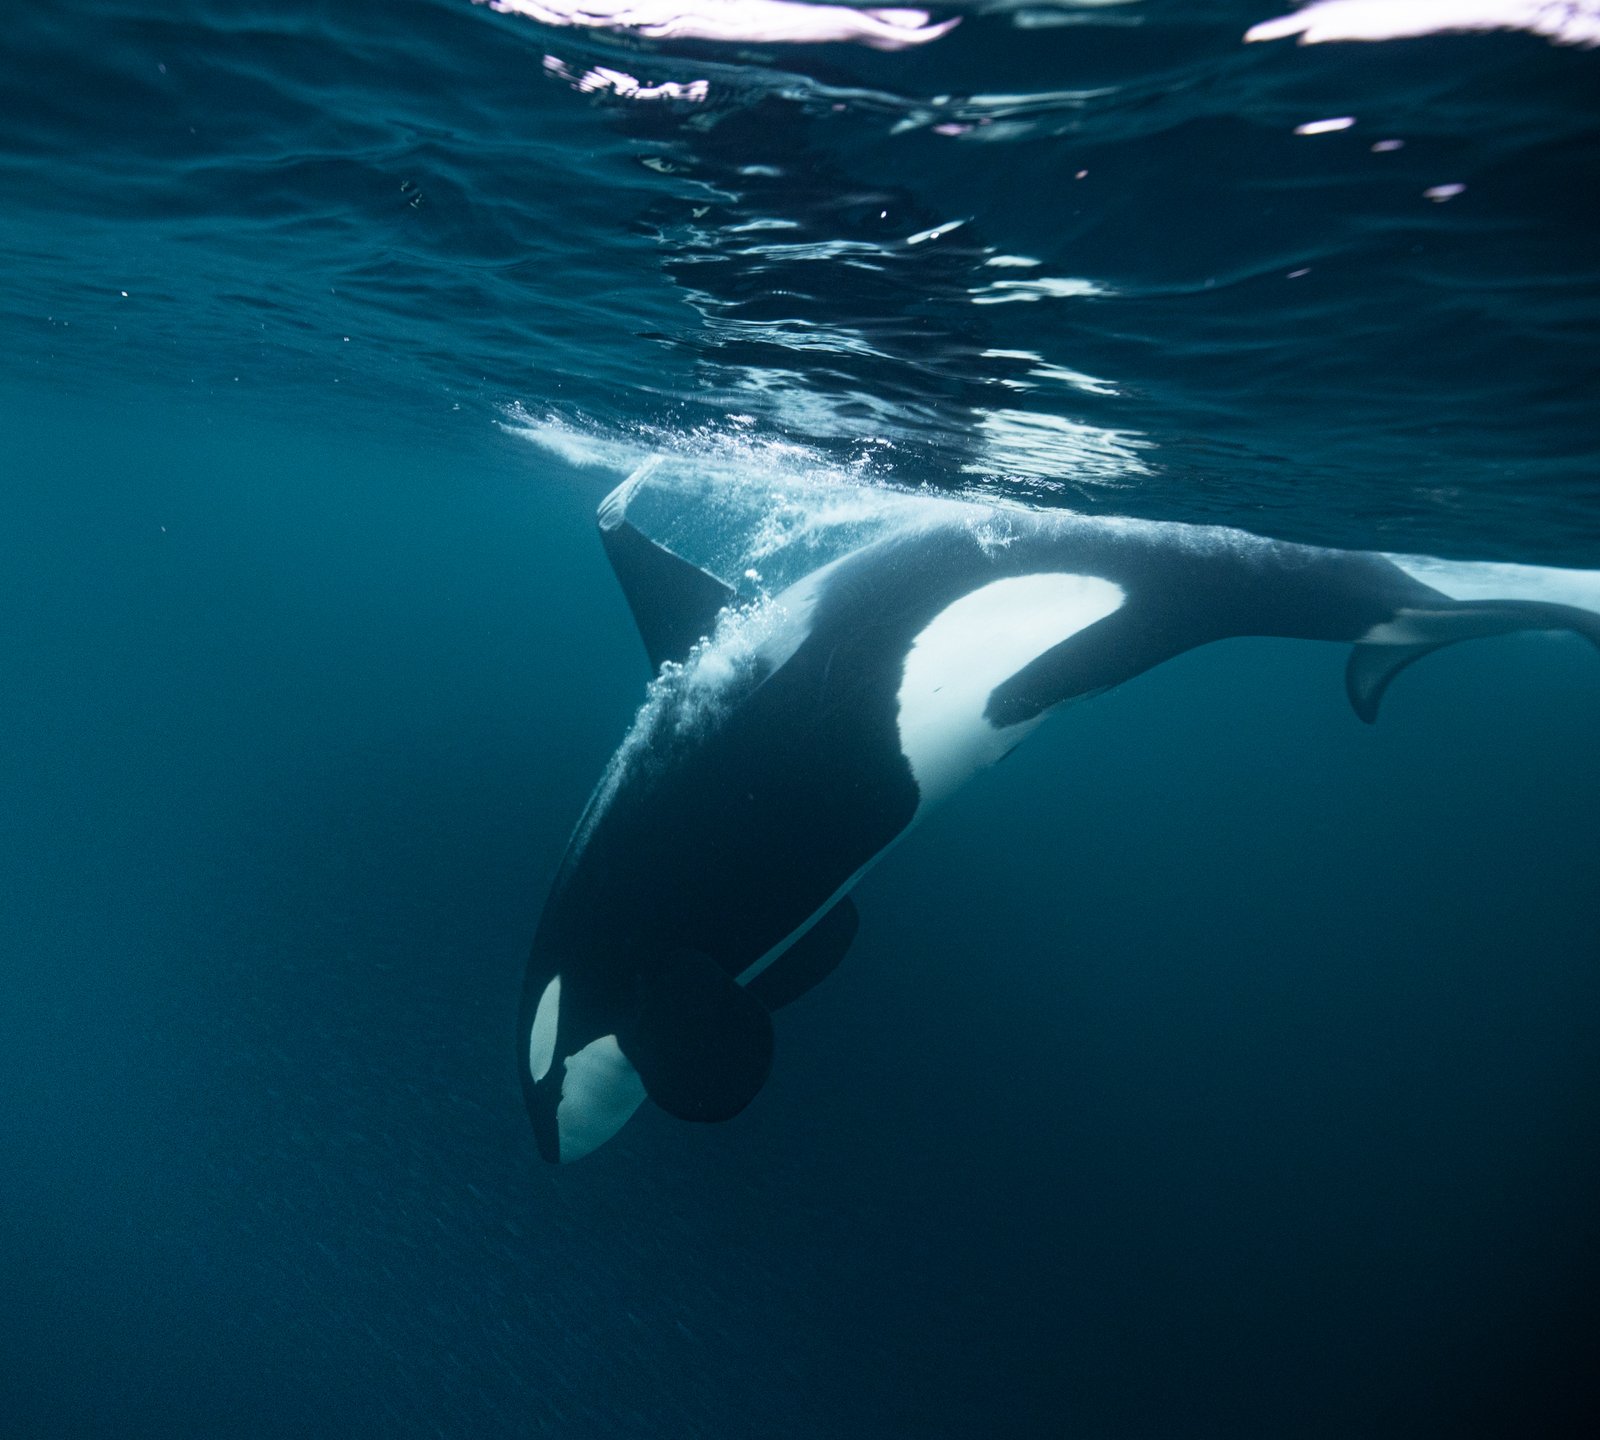 stephane grazotto underwater orca expedition diver snorkel norway